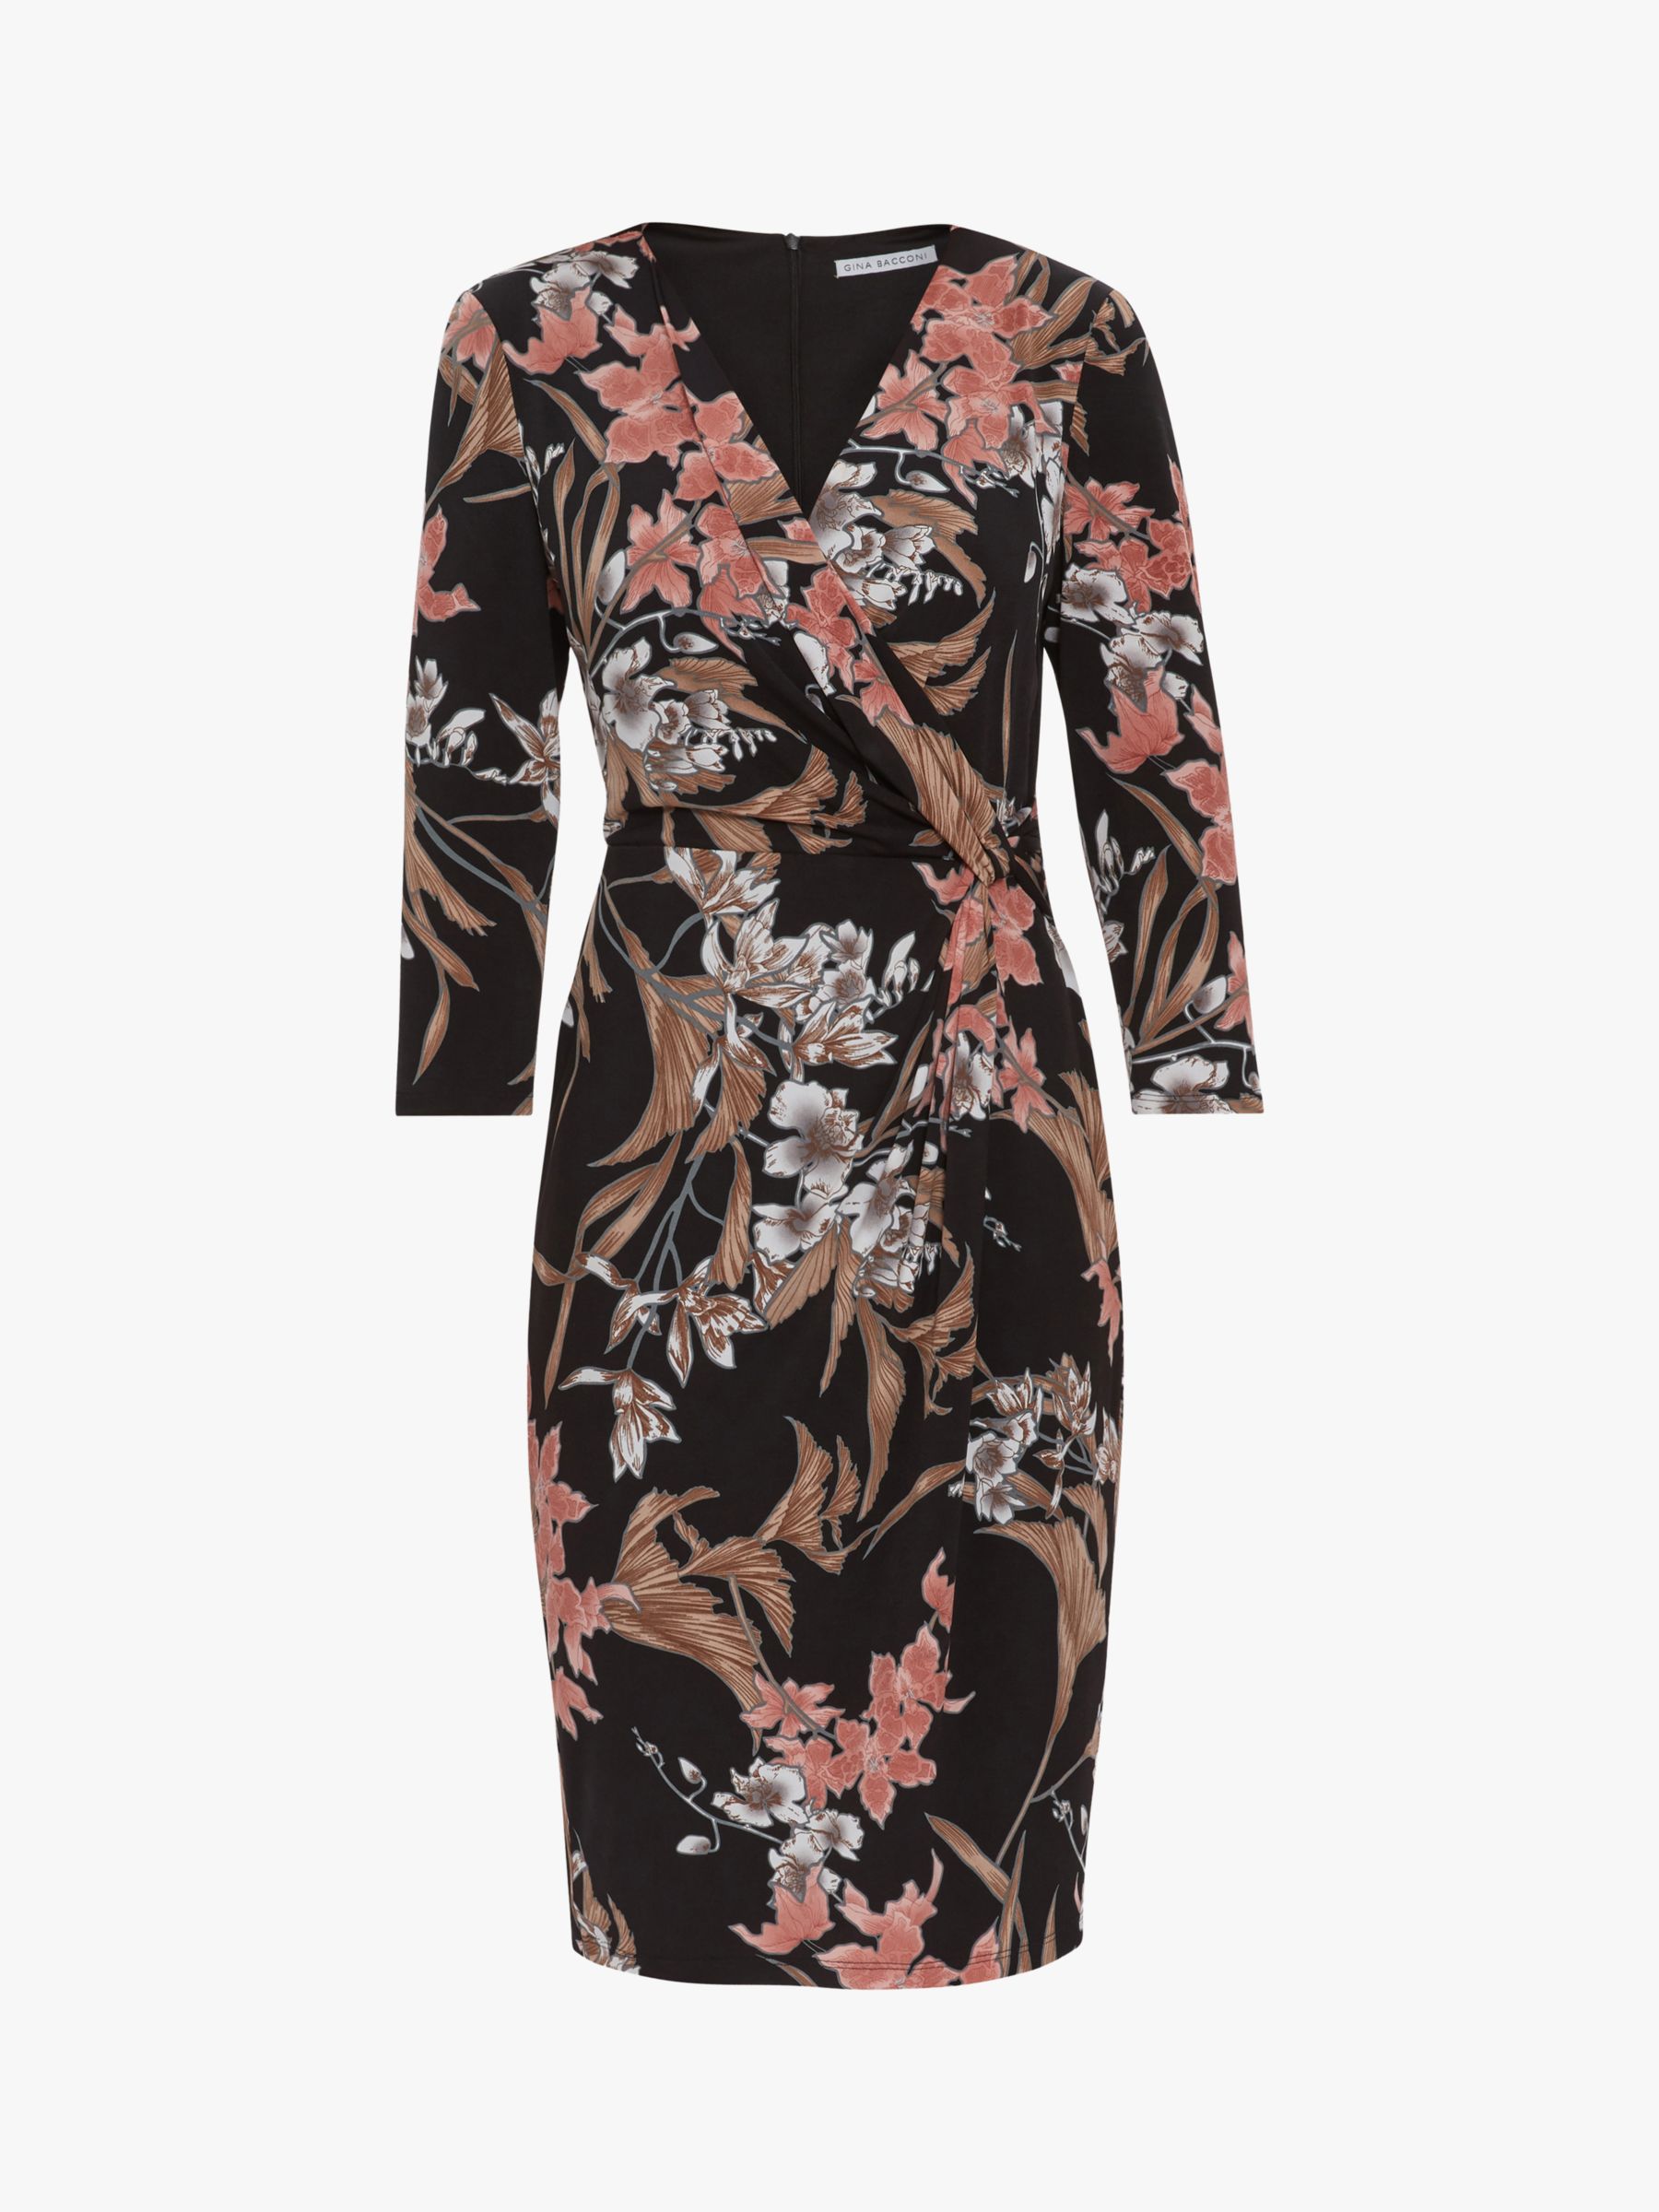 Gina Bacconi Tassiana Floral Dress, Black/Beige at John Lewis & Partners